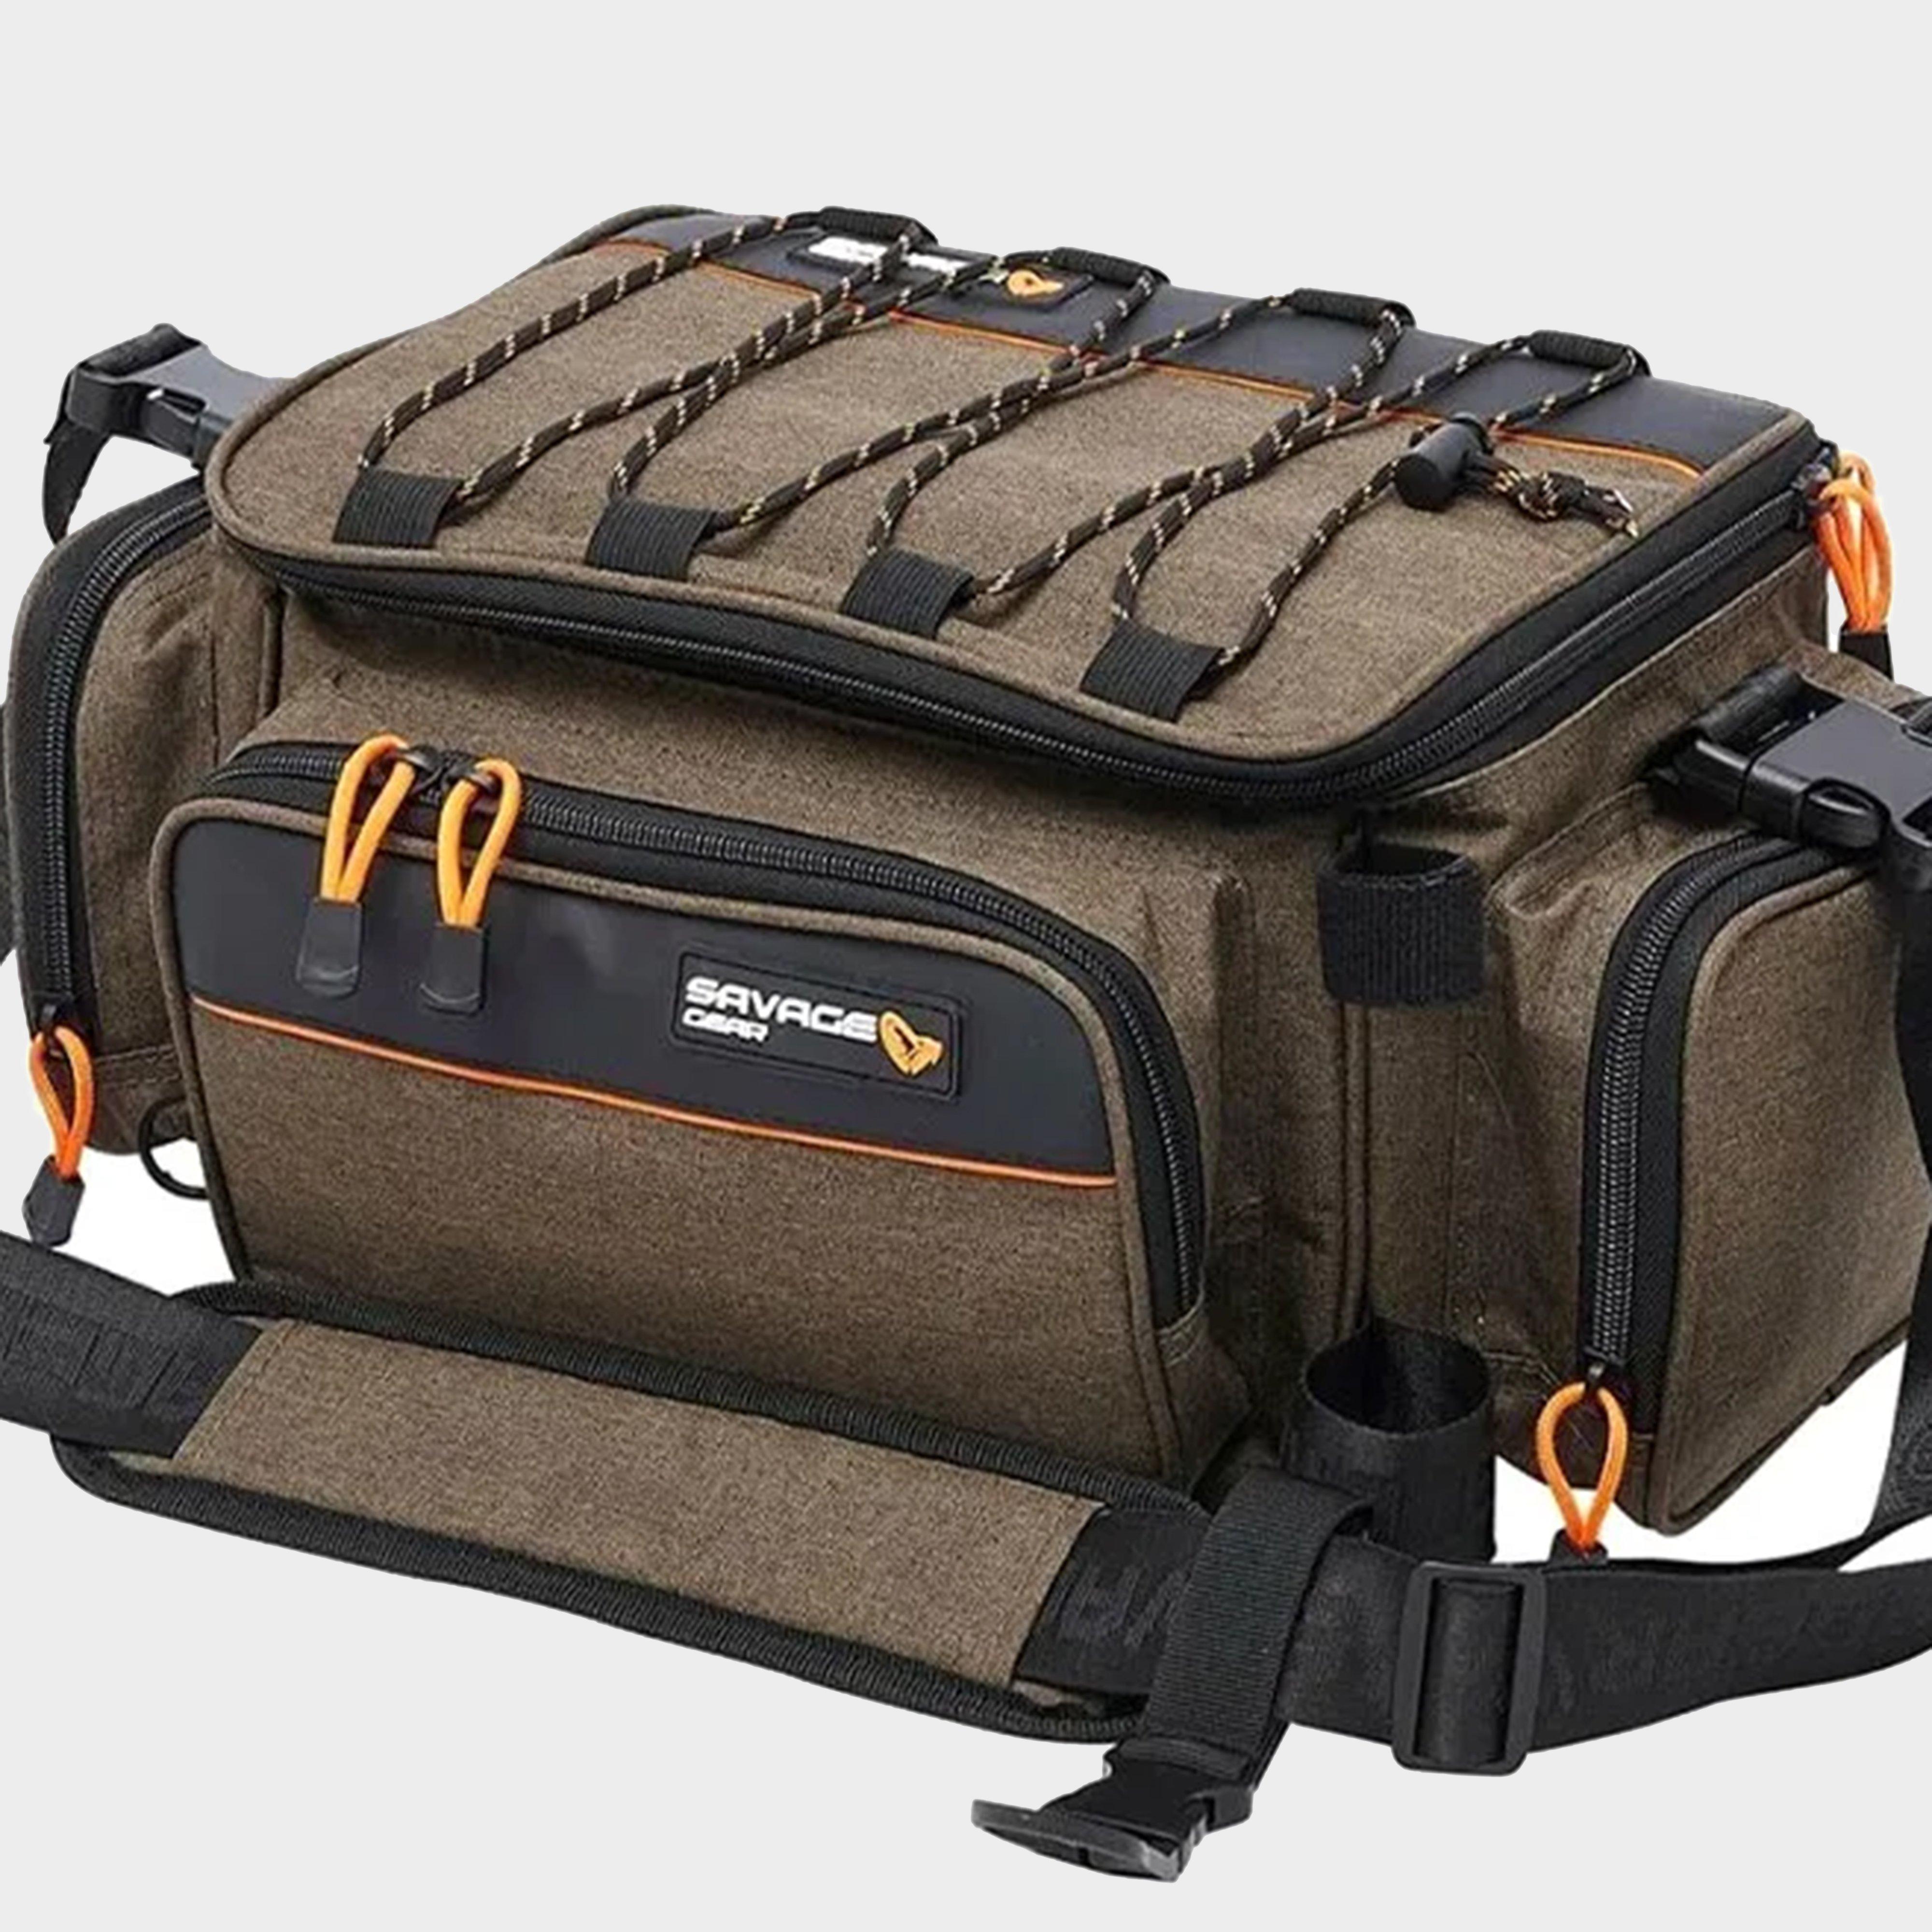  SavageGear System Box Bag, Grey